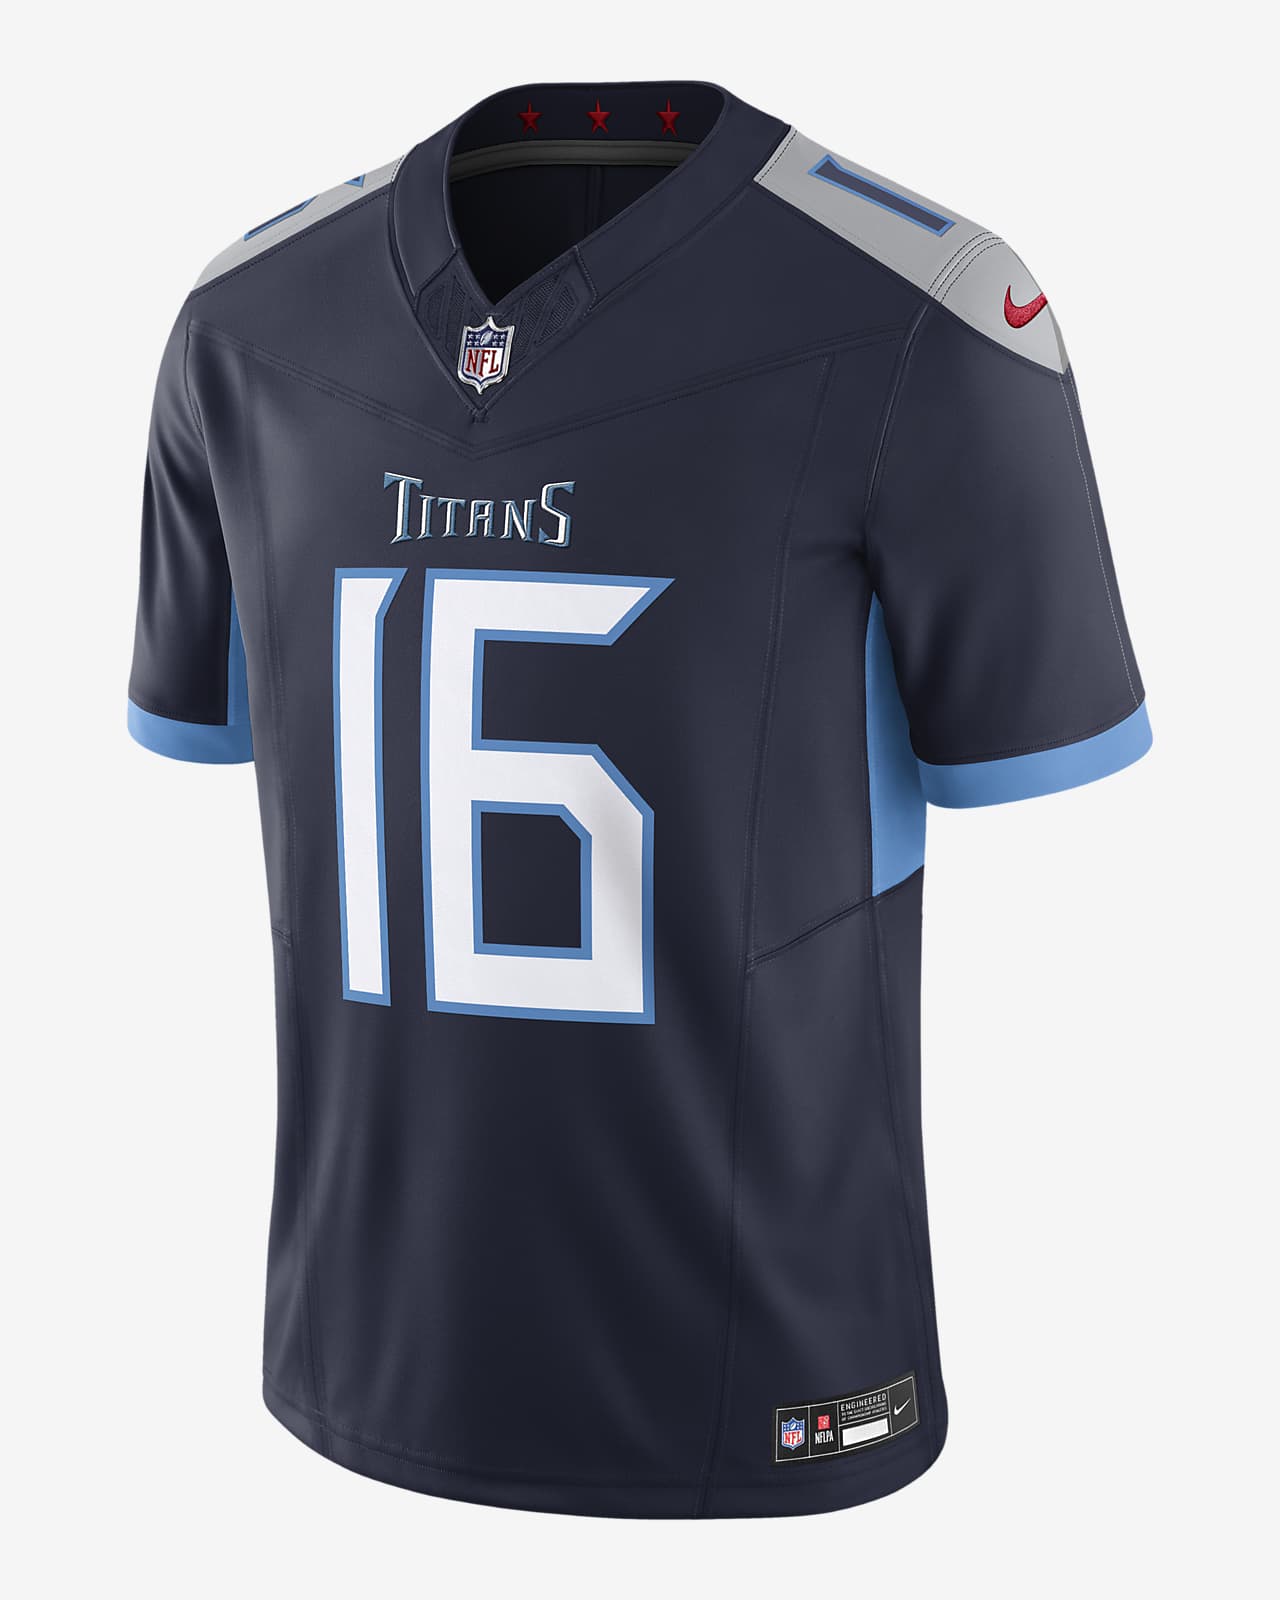 Jersey de fútbol americano Nike Dri-FIT de la NFL Limited para hombre Treylon Burks Tennessee Titans